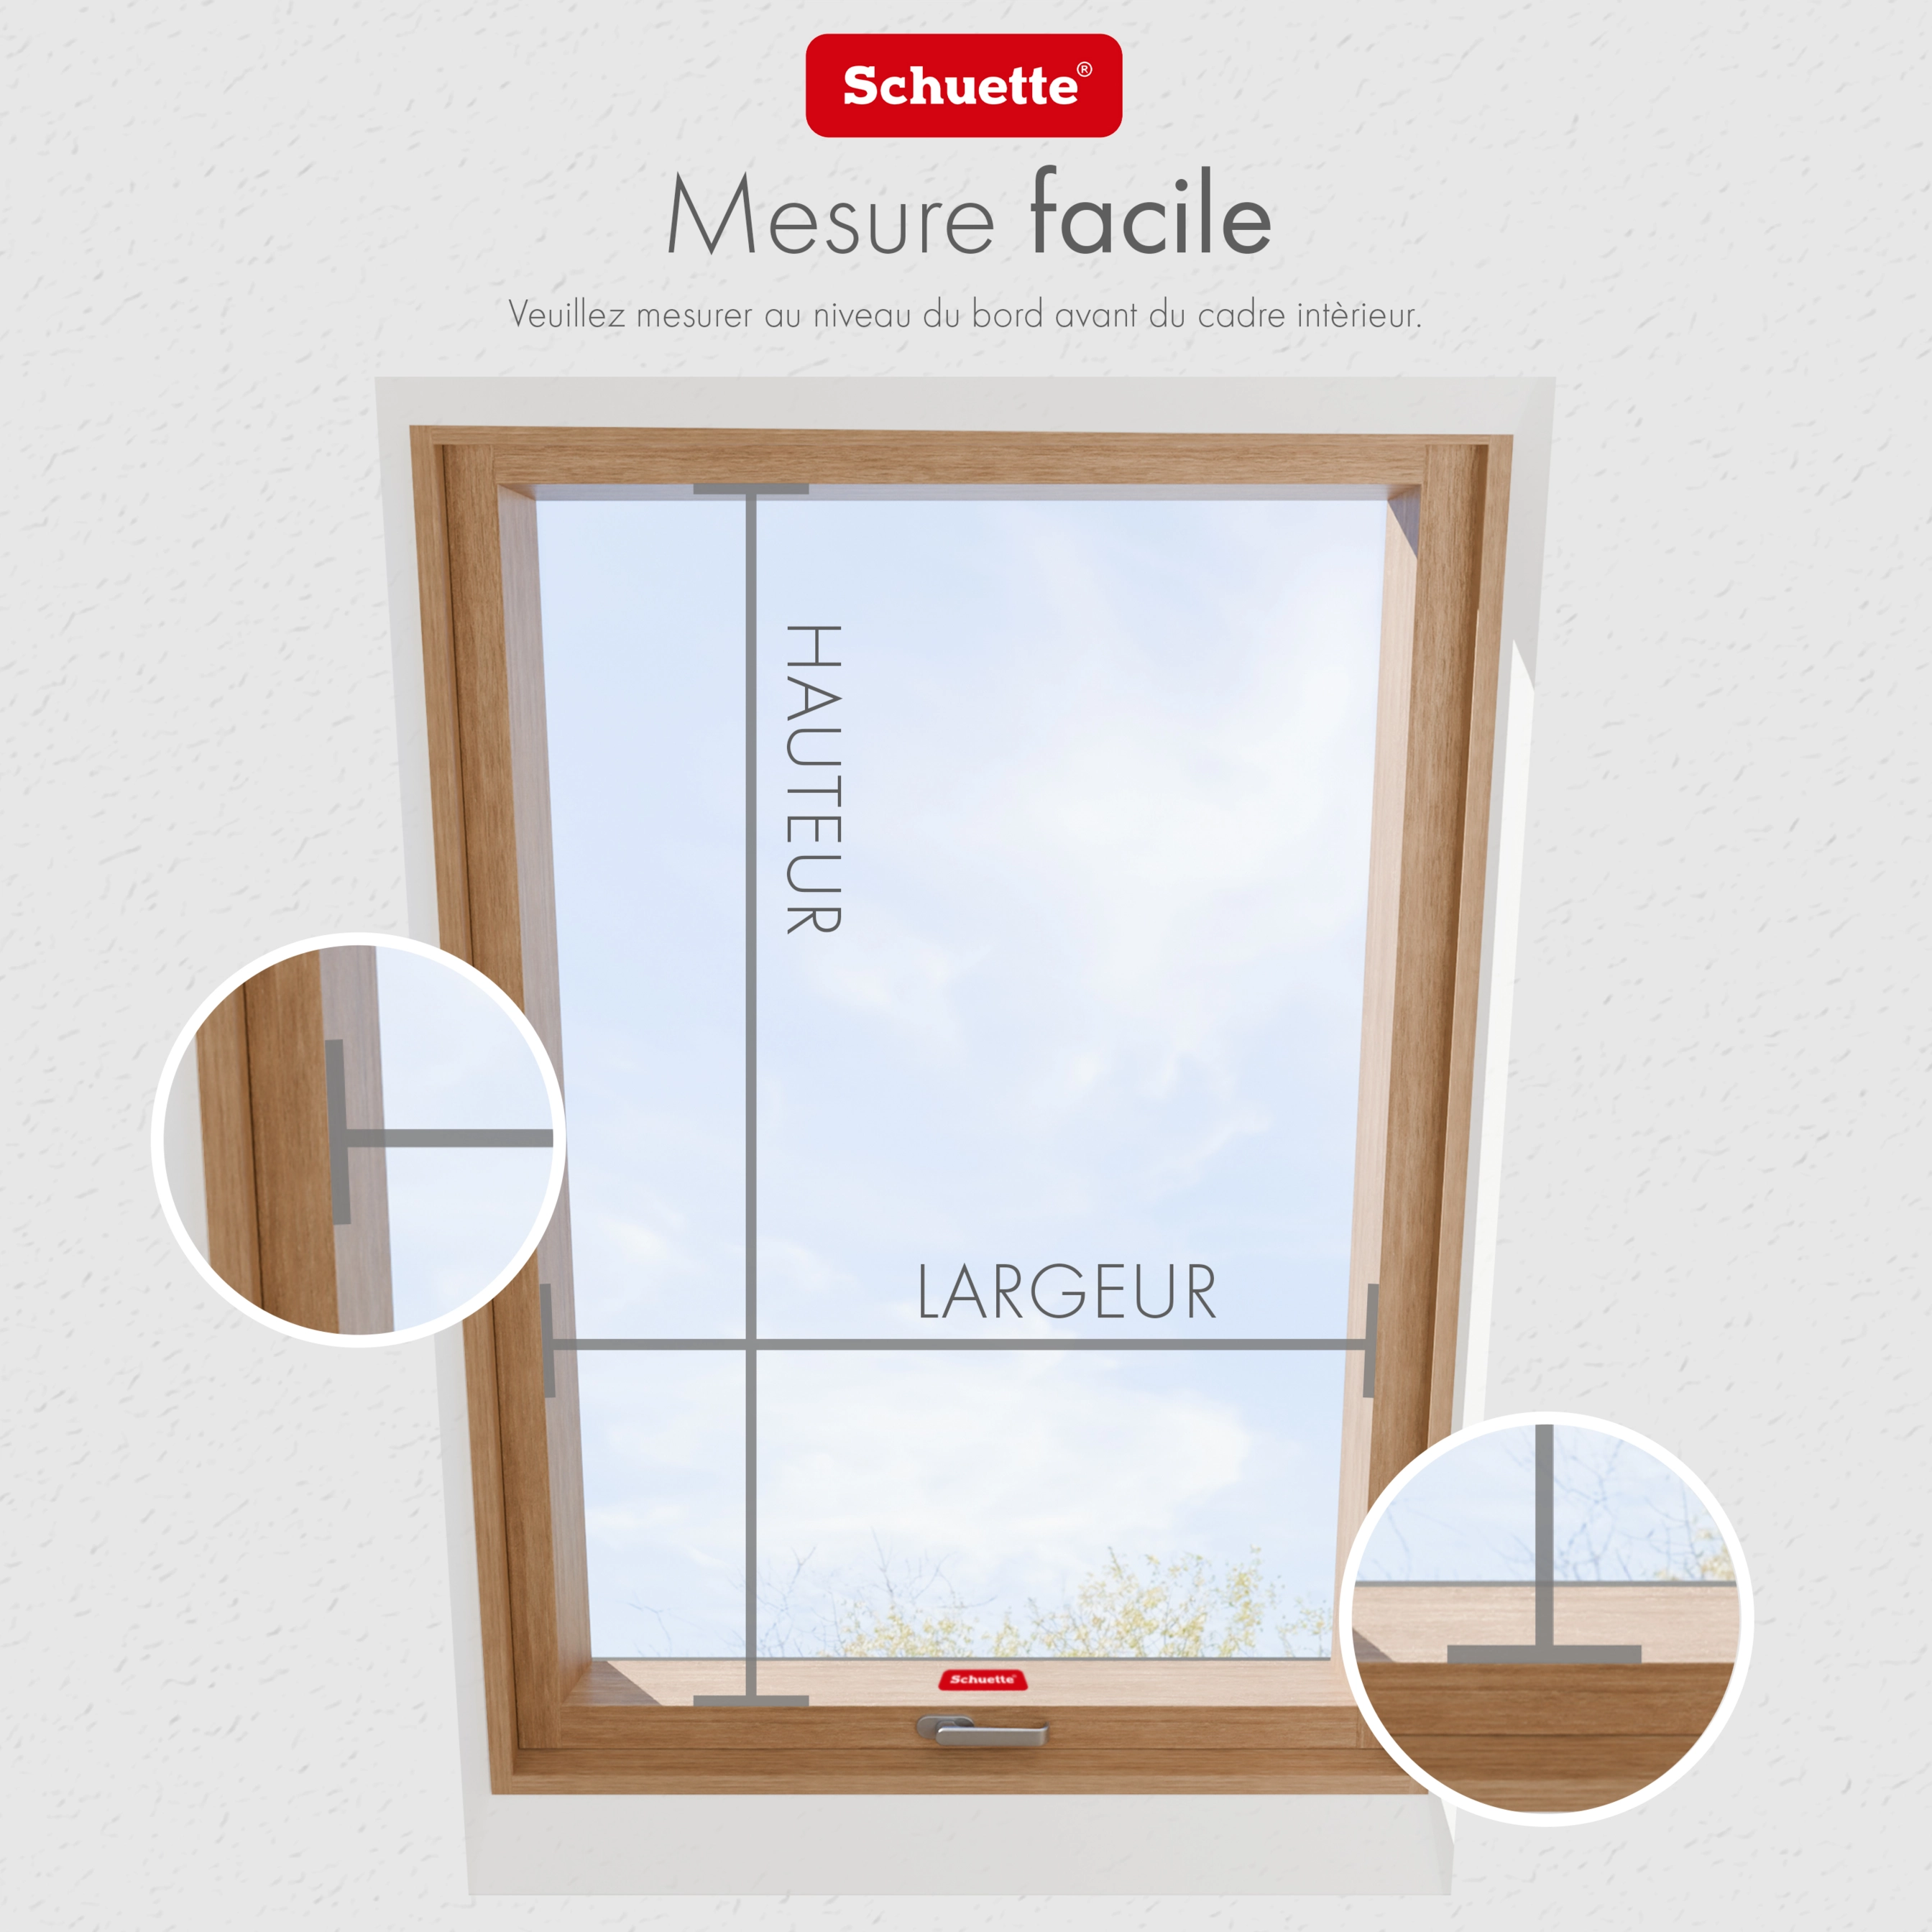 Schuette® Dachfenster Plissee nach Maß • Thermo Kollektion: Spring Cloud (Grau) • Profilfarbe: Weiß